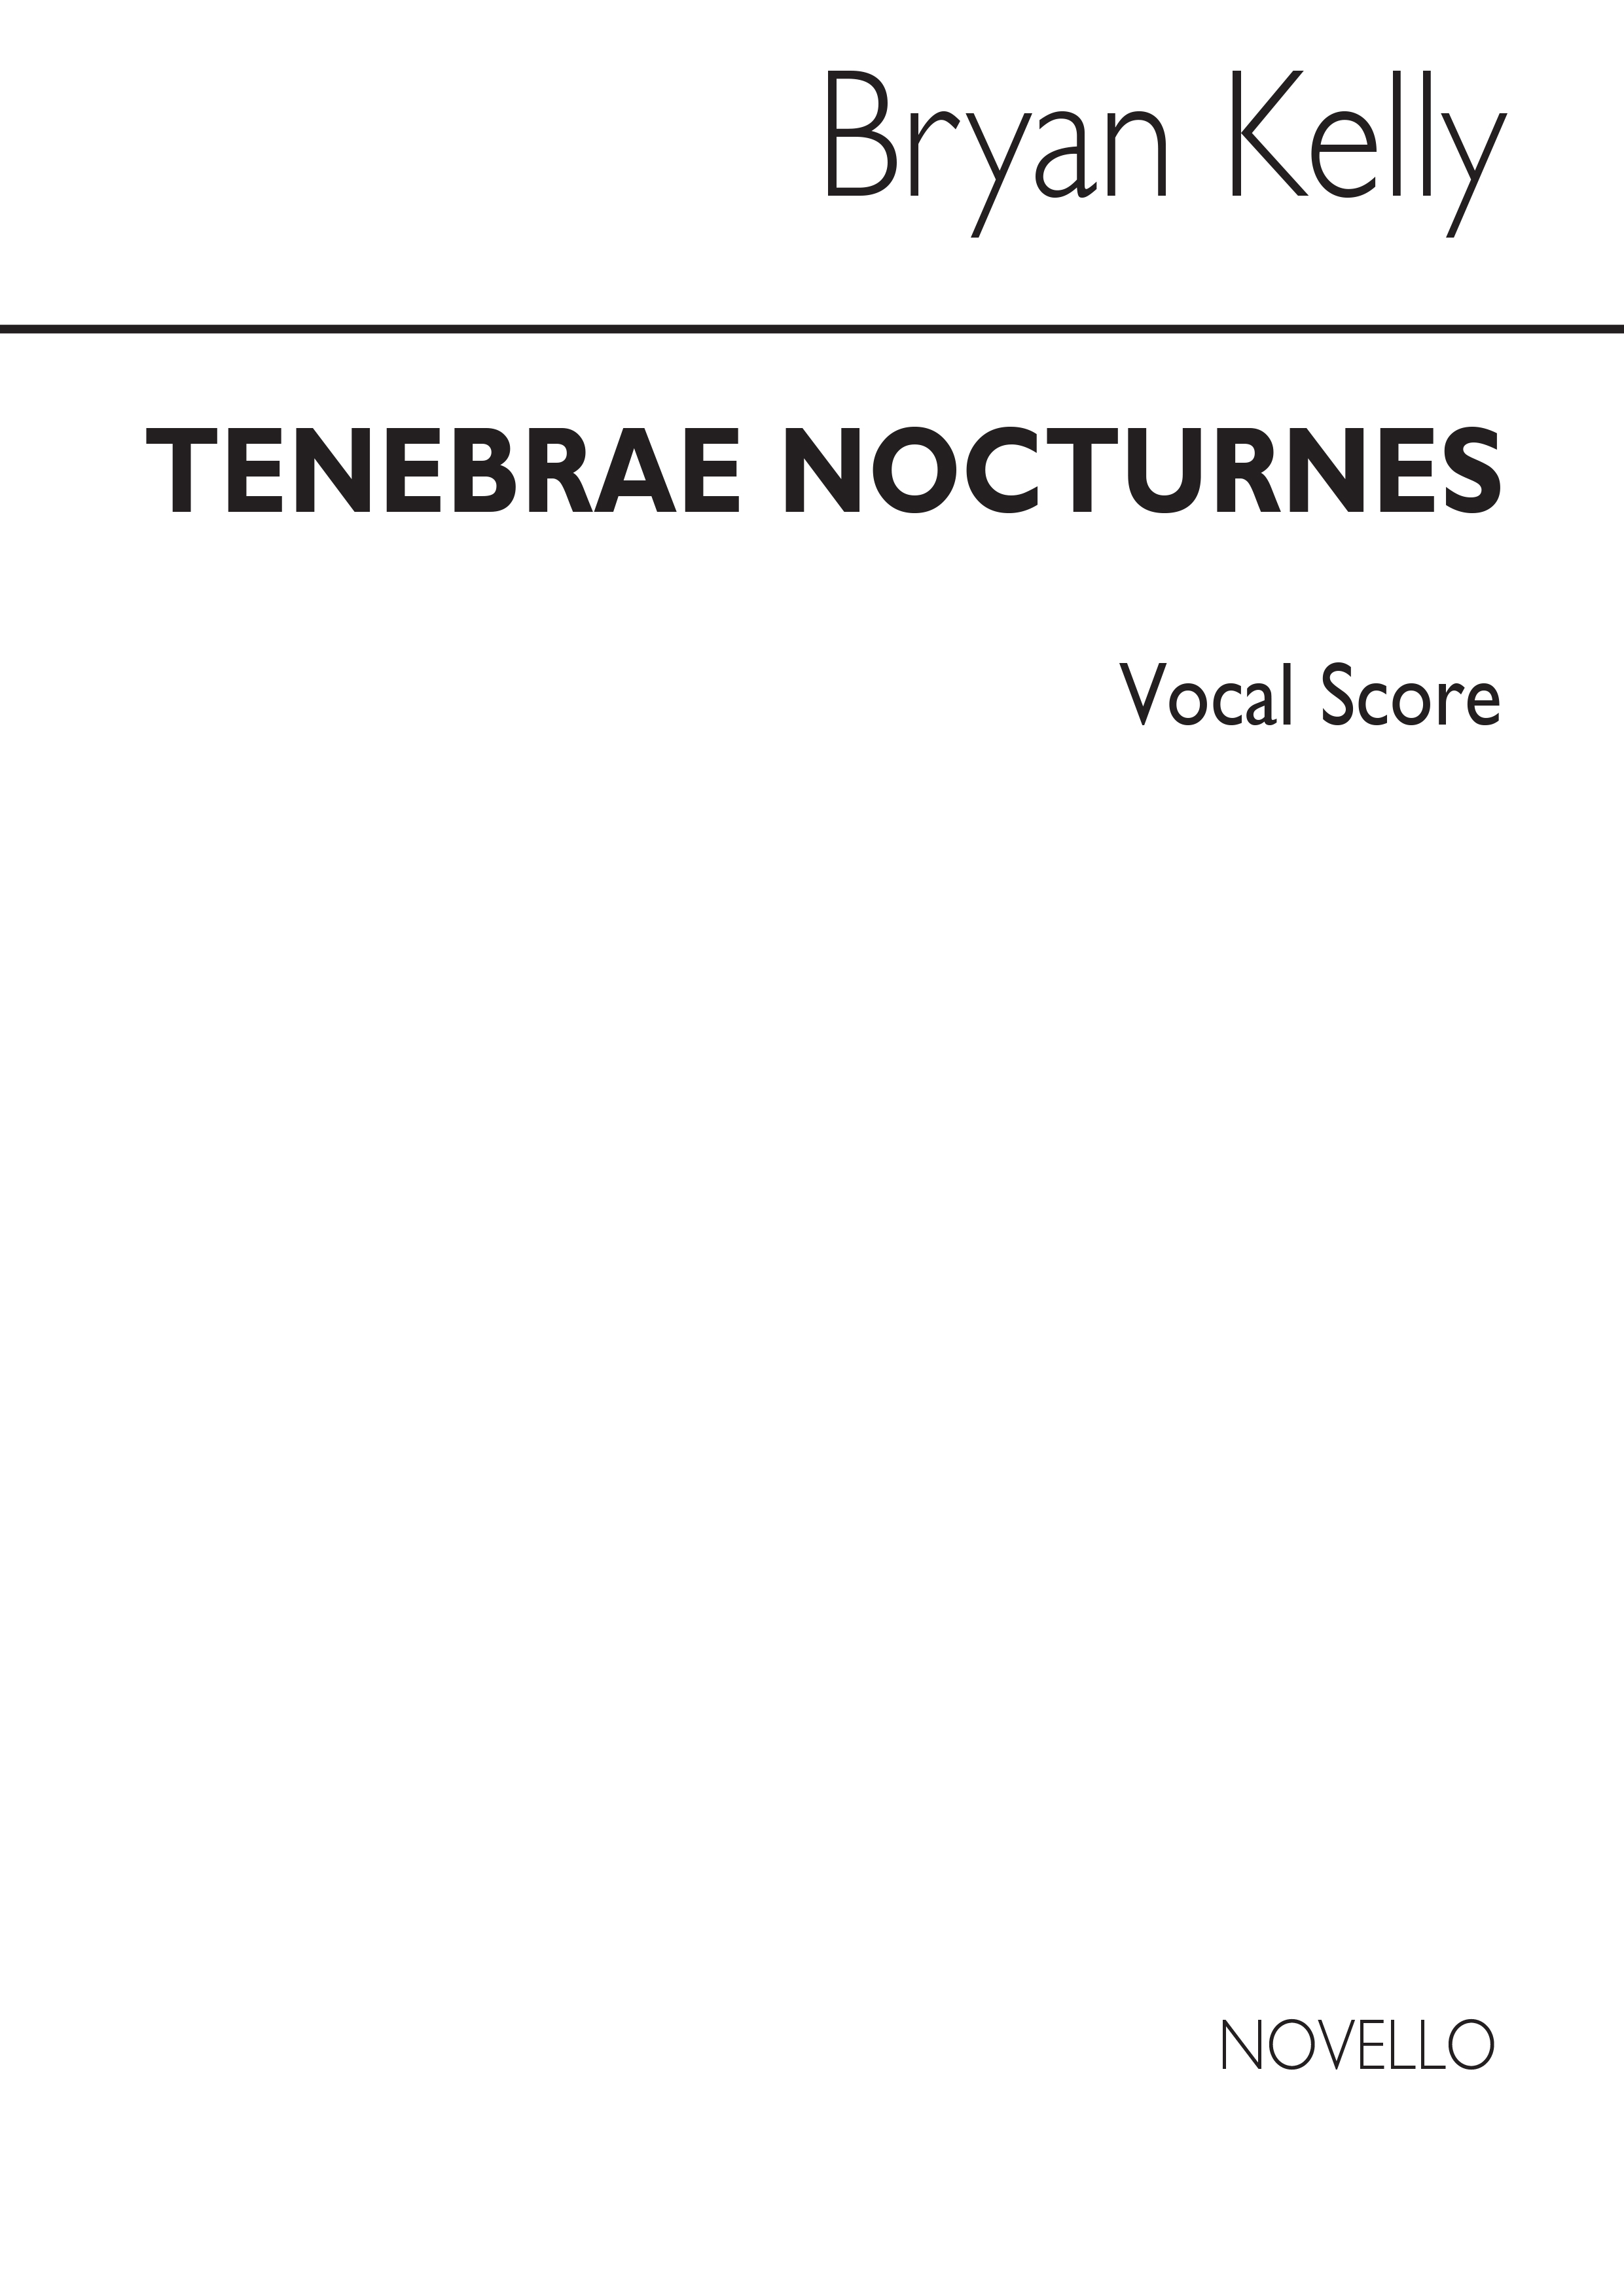 Bryan Kelly: Tenebrae Nocturnes (Vocal Score)